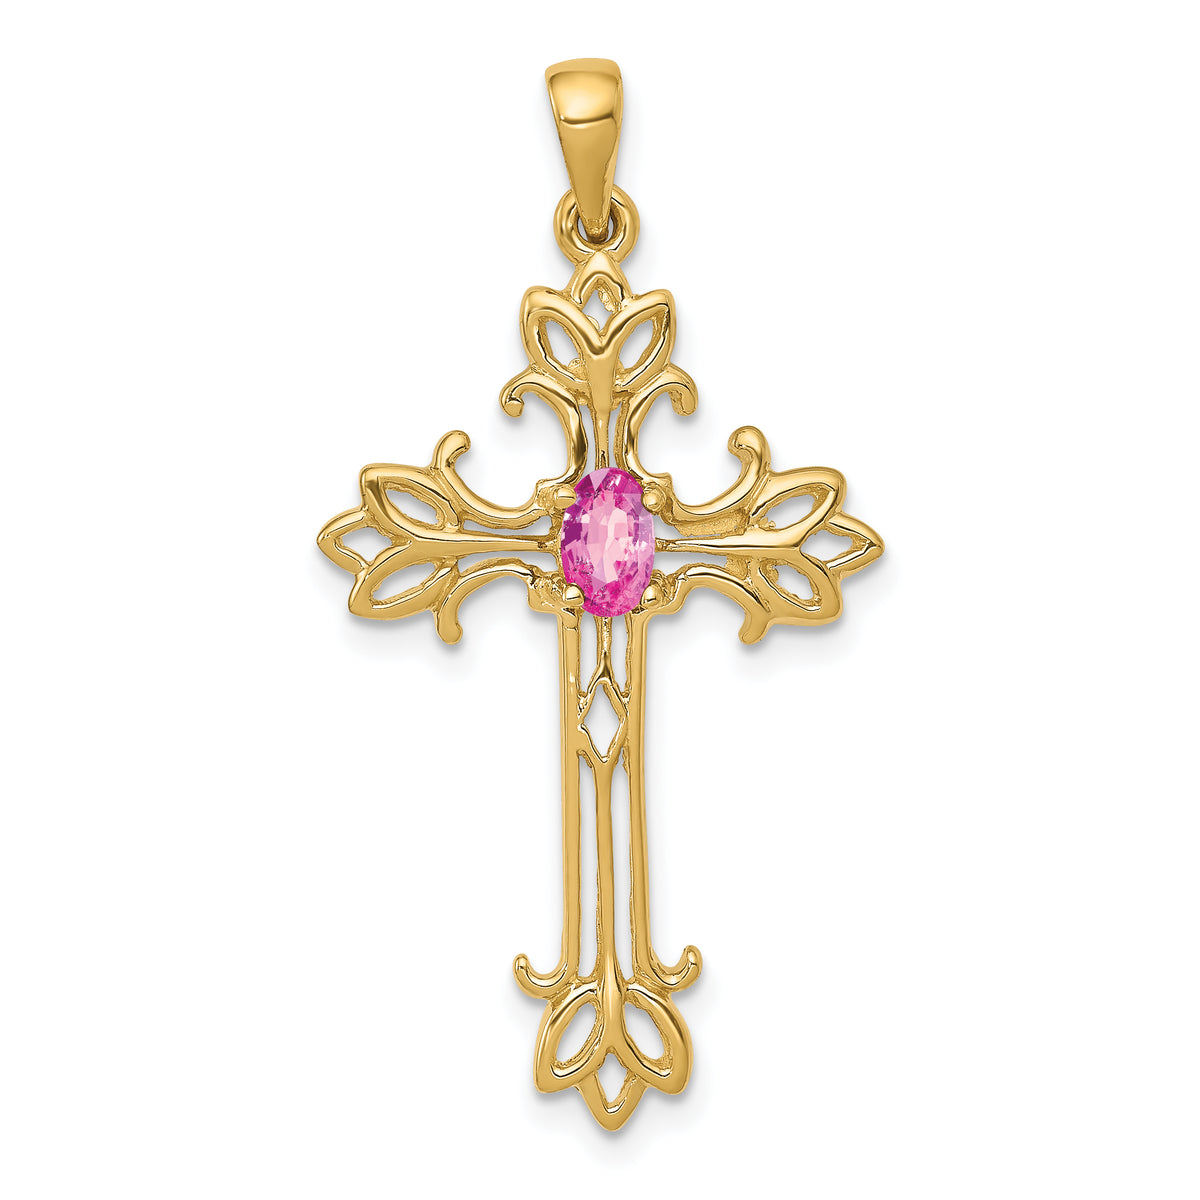 10k 5x3mm Oval Pink Sapphire cross pendant